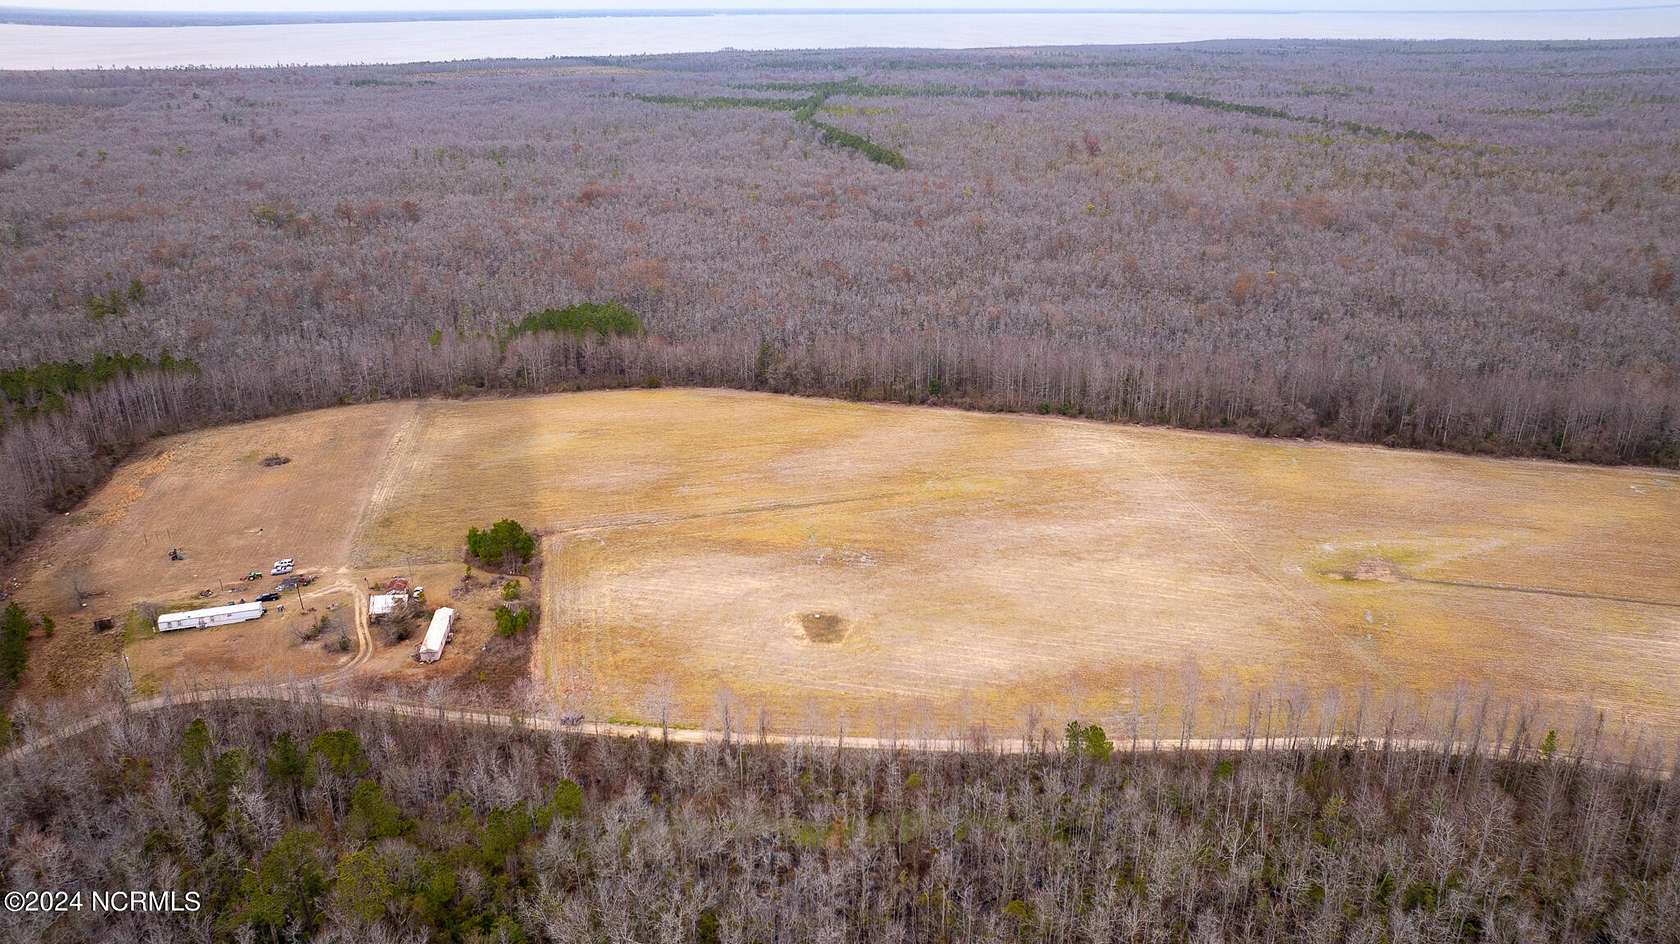 7.9 Acres of Land for Sale in Roper, North Carolina